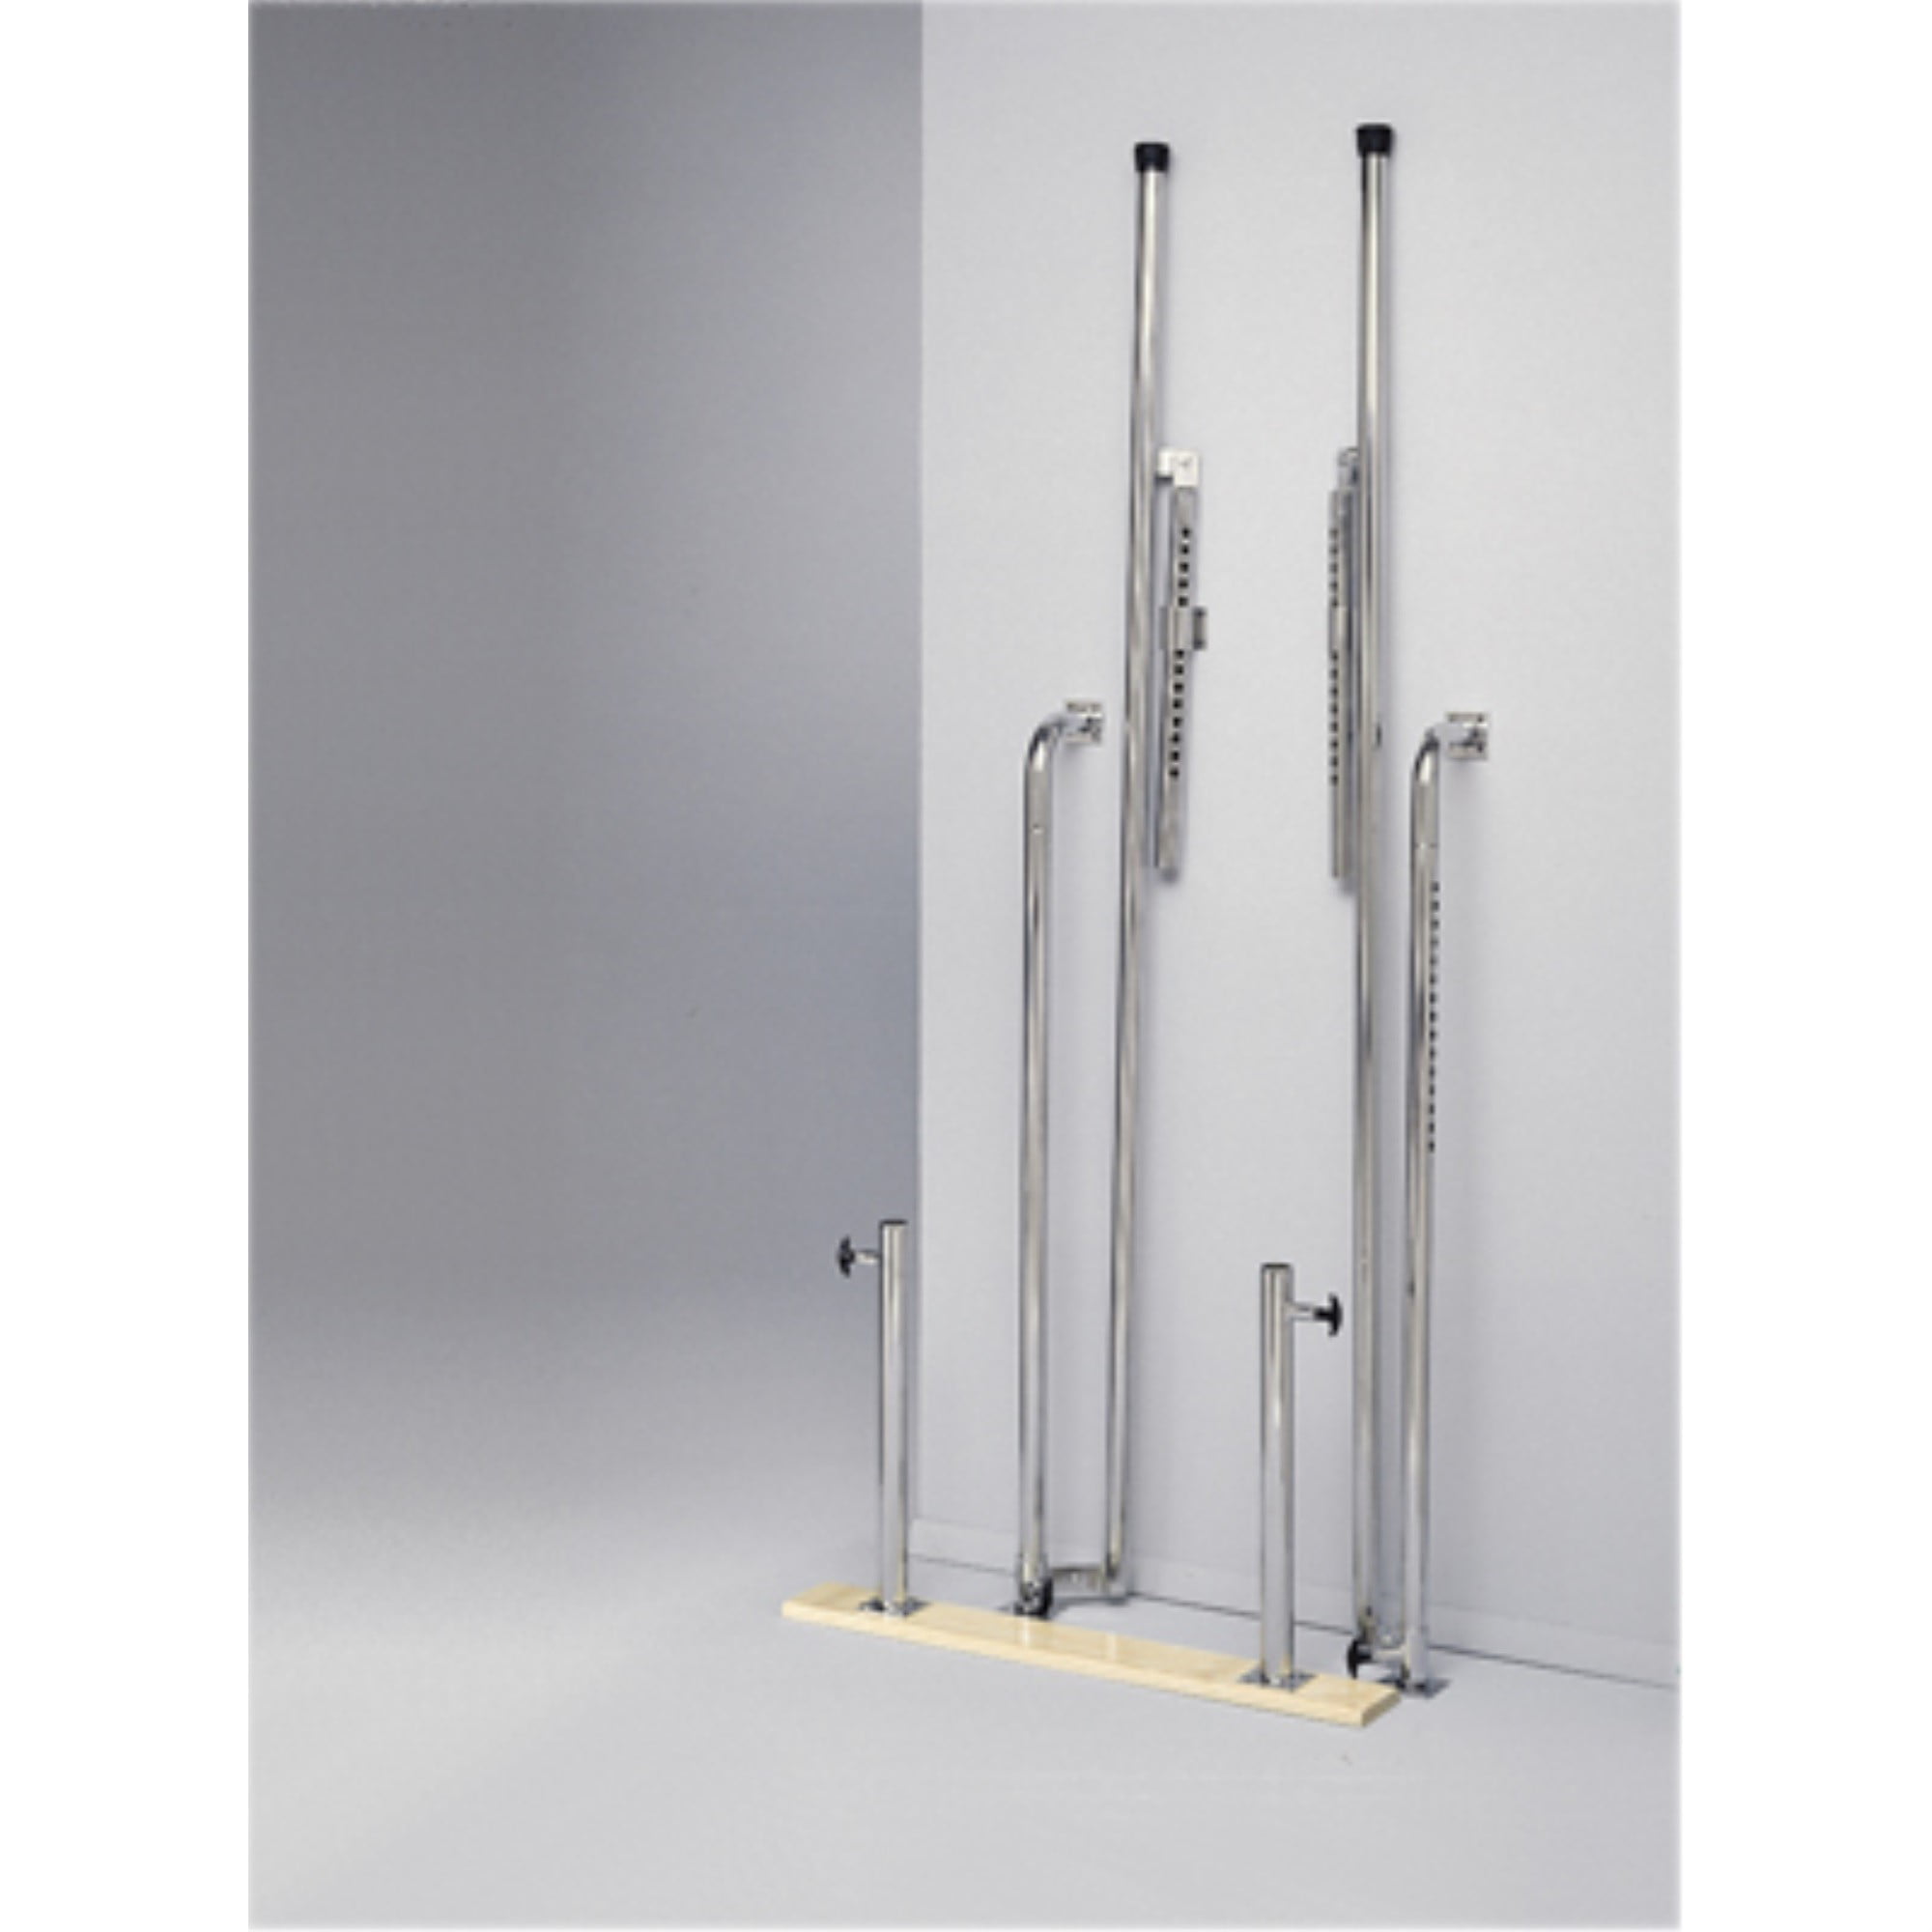 10 Length Capacity 350 lb Fabrication Enterprises 15-4081 Adjustable Platform with Parallel Bars